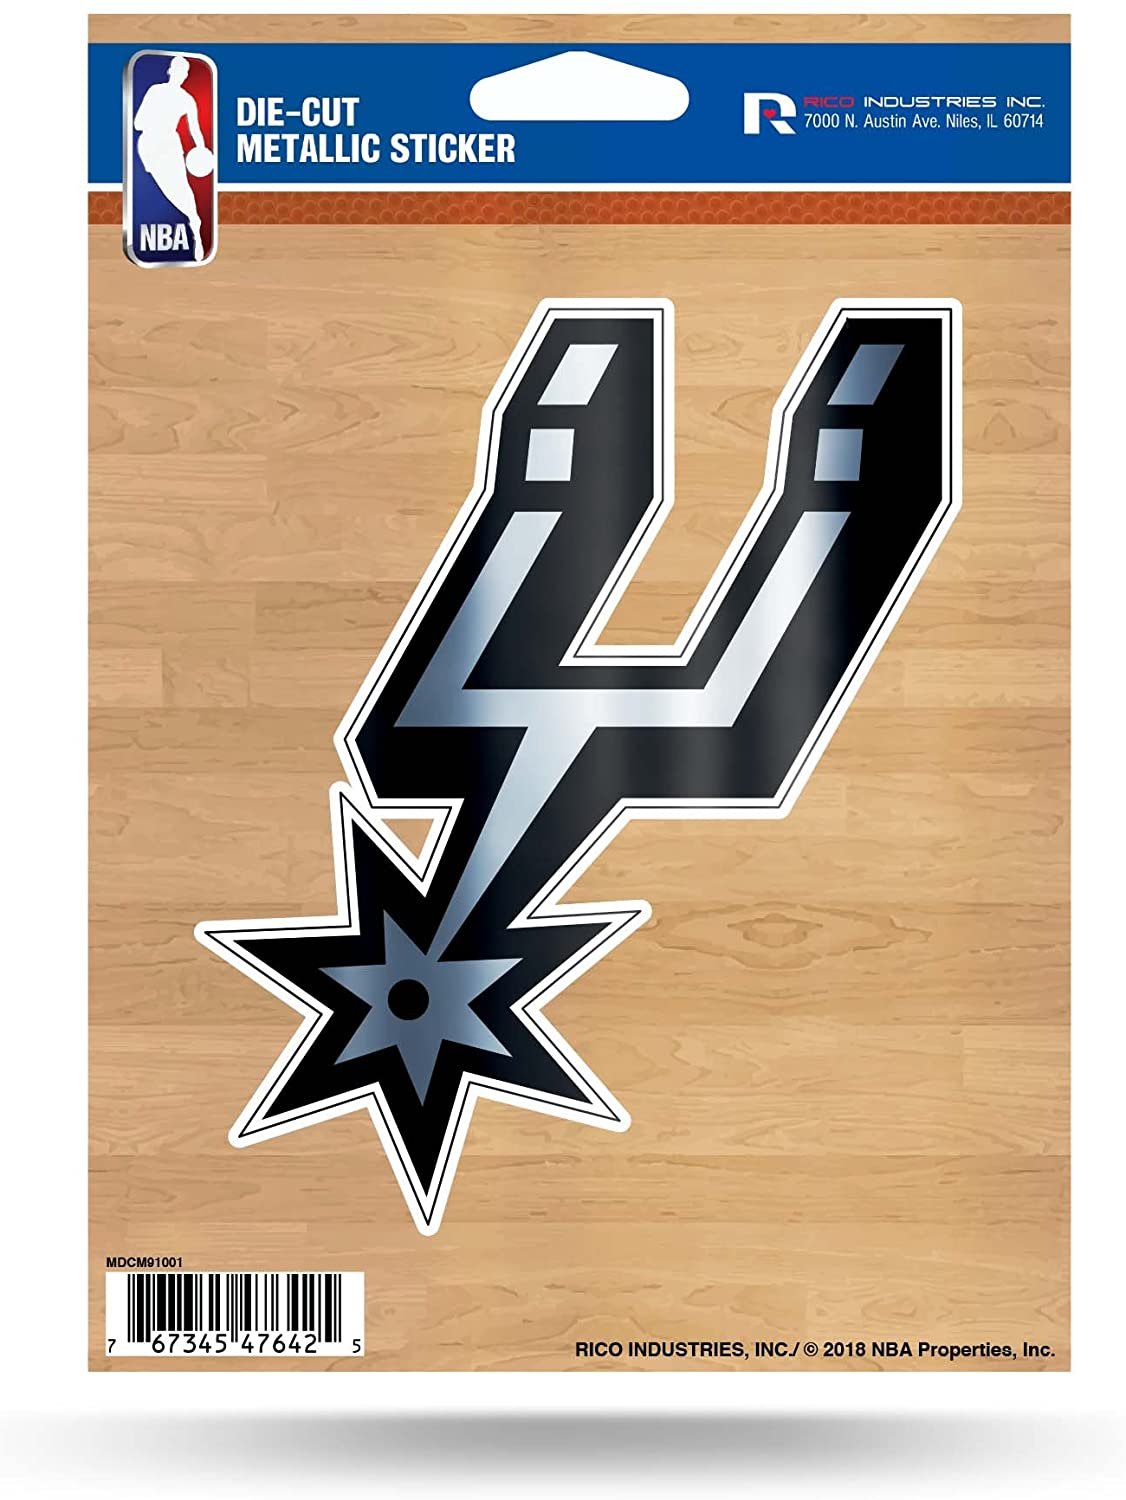 San Antonio Spurs 5 Inch Die Cut Decal Sticker, Metallic Shimmer Design, Full Adhesive Backing